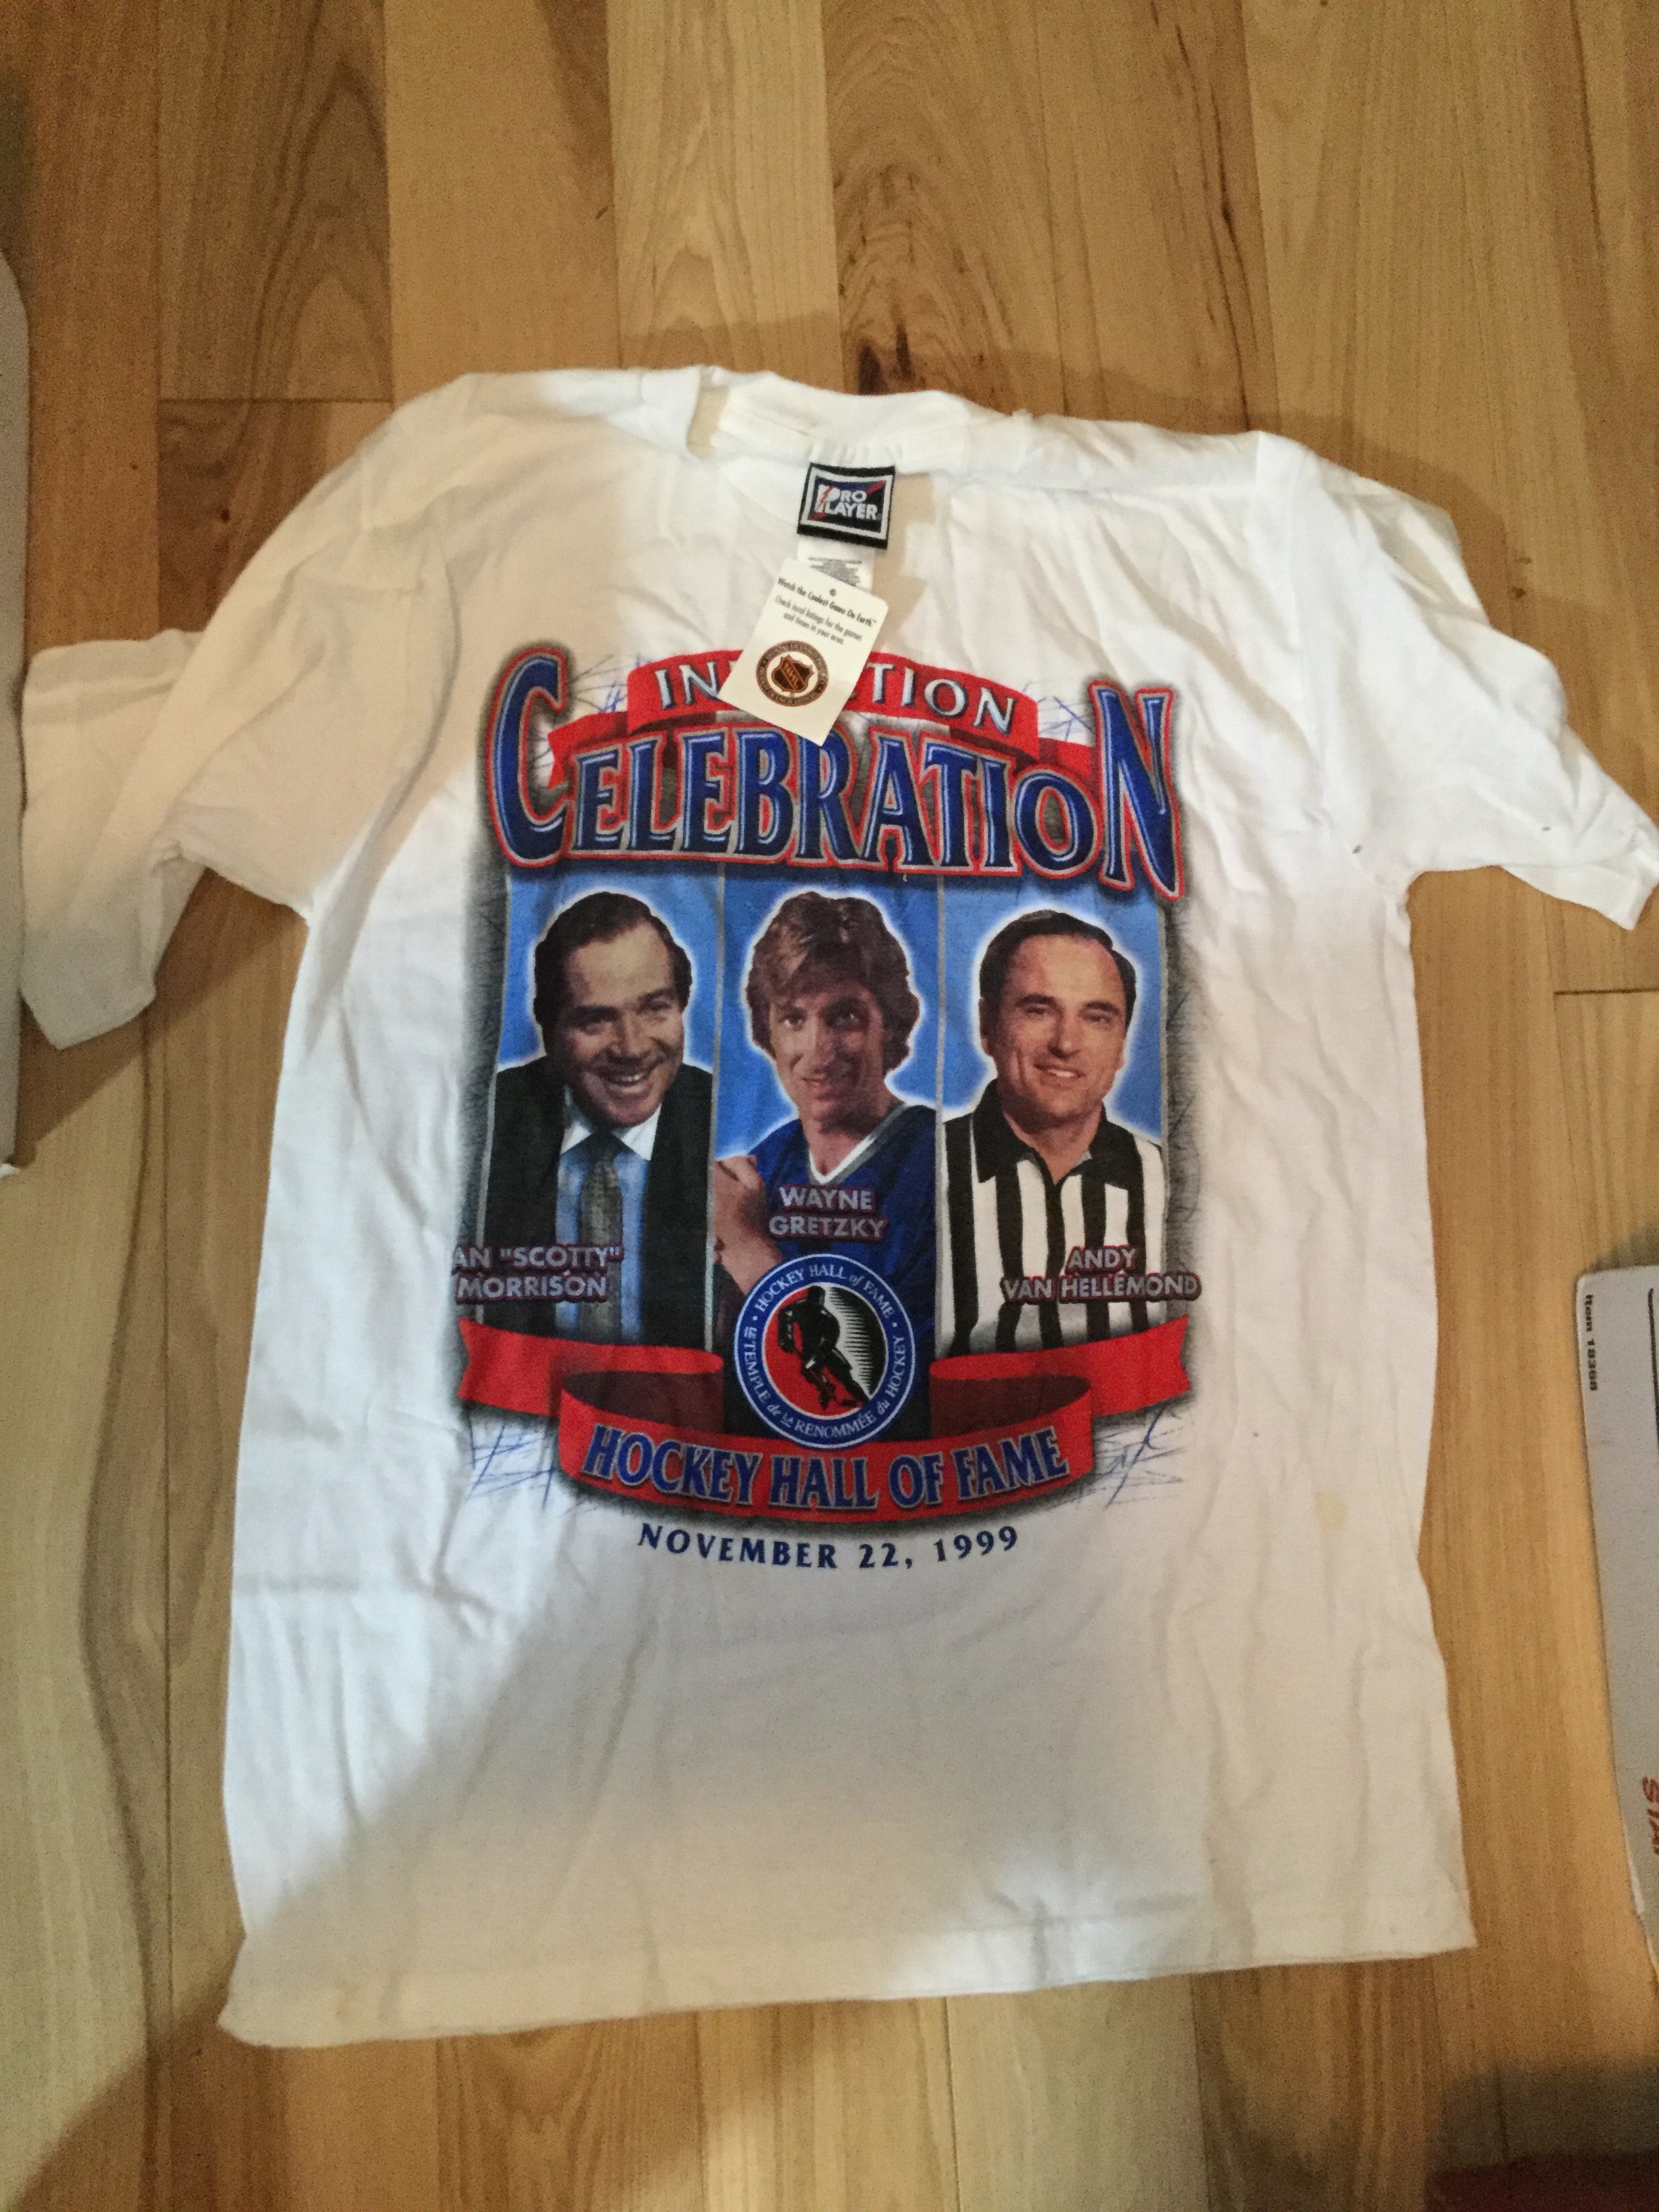 Wayne Gretzky rare Hockey Hall of Fame induction ceremony T-shirt 1999